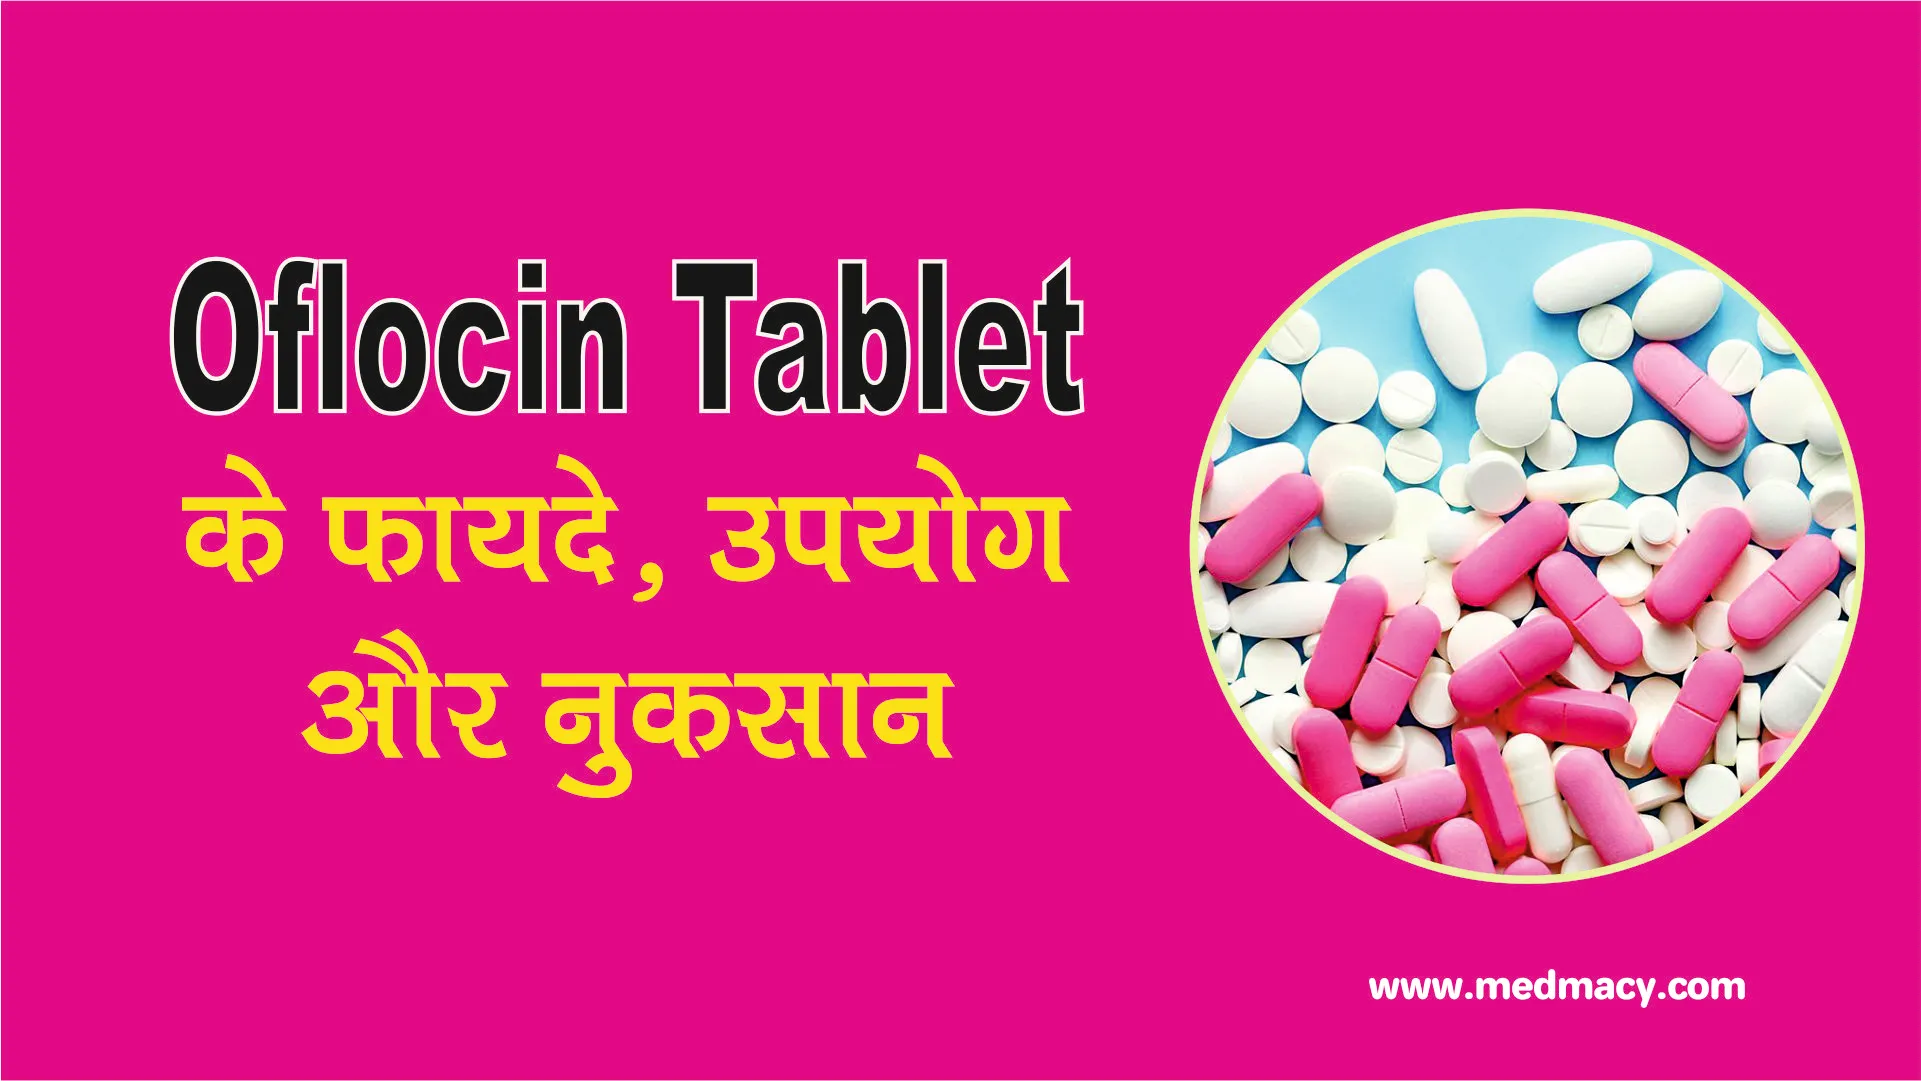 Oflocin Tablet (Laborat) Uses in Hindi